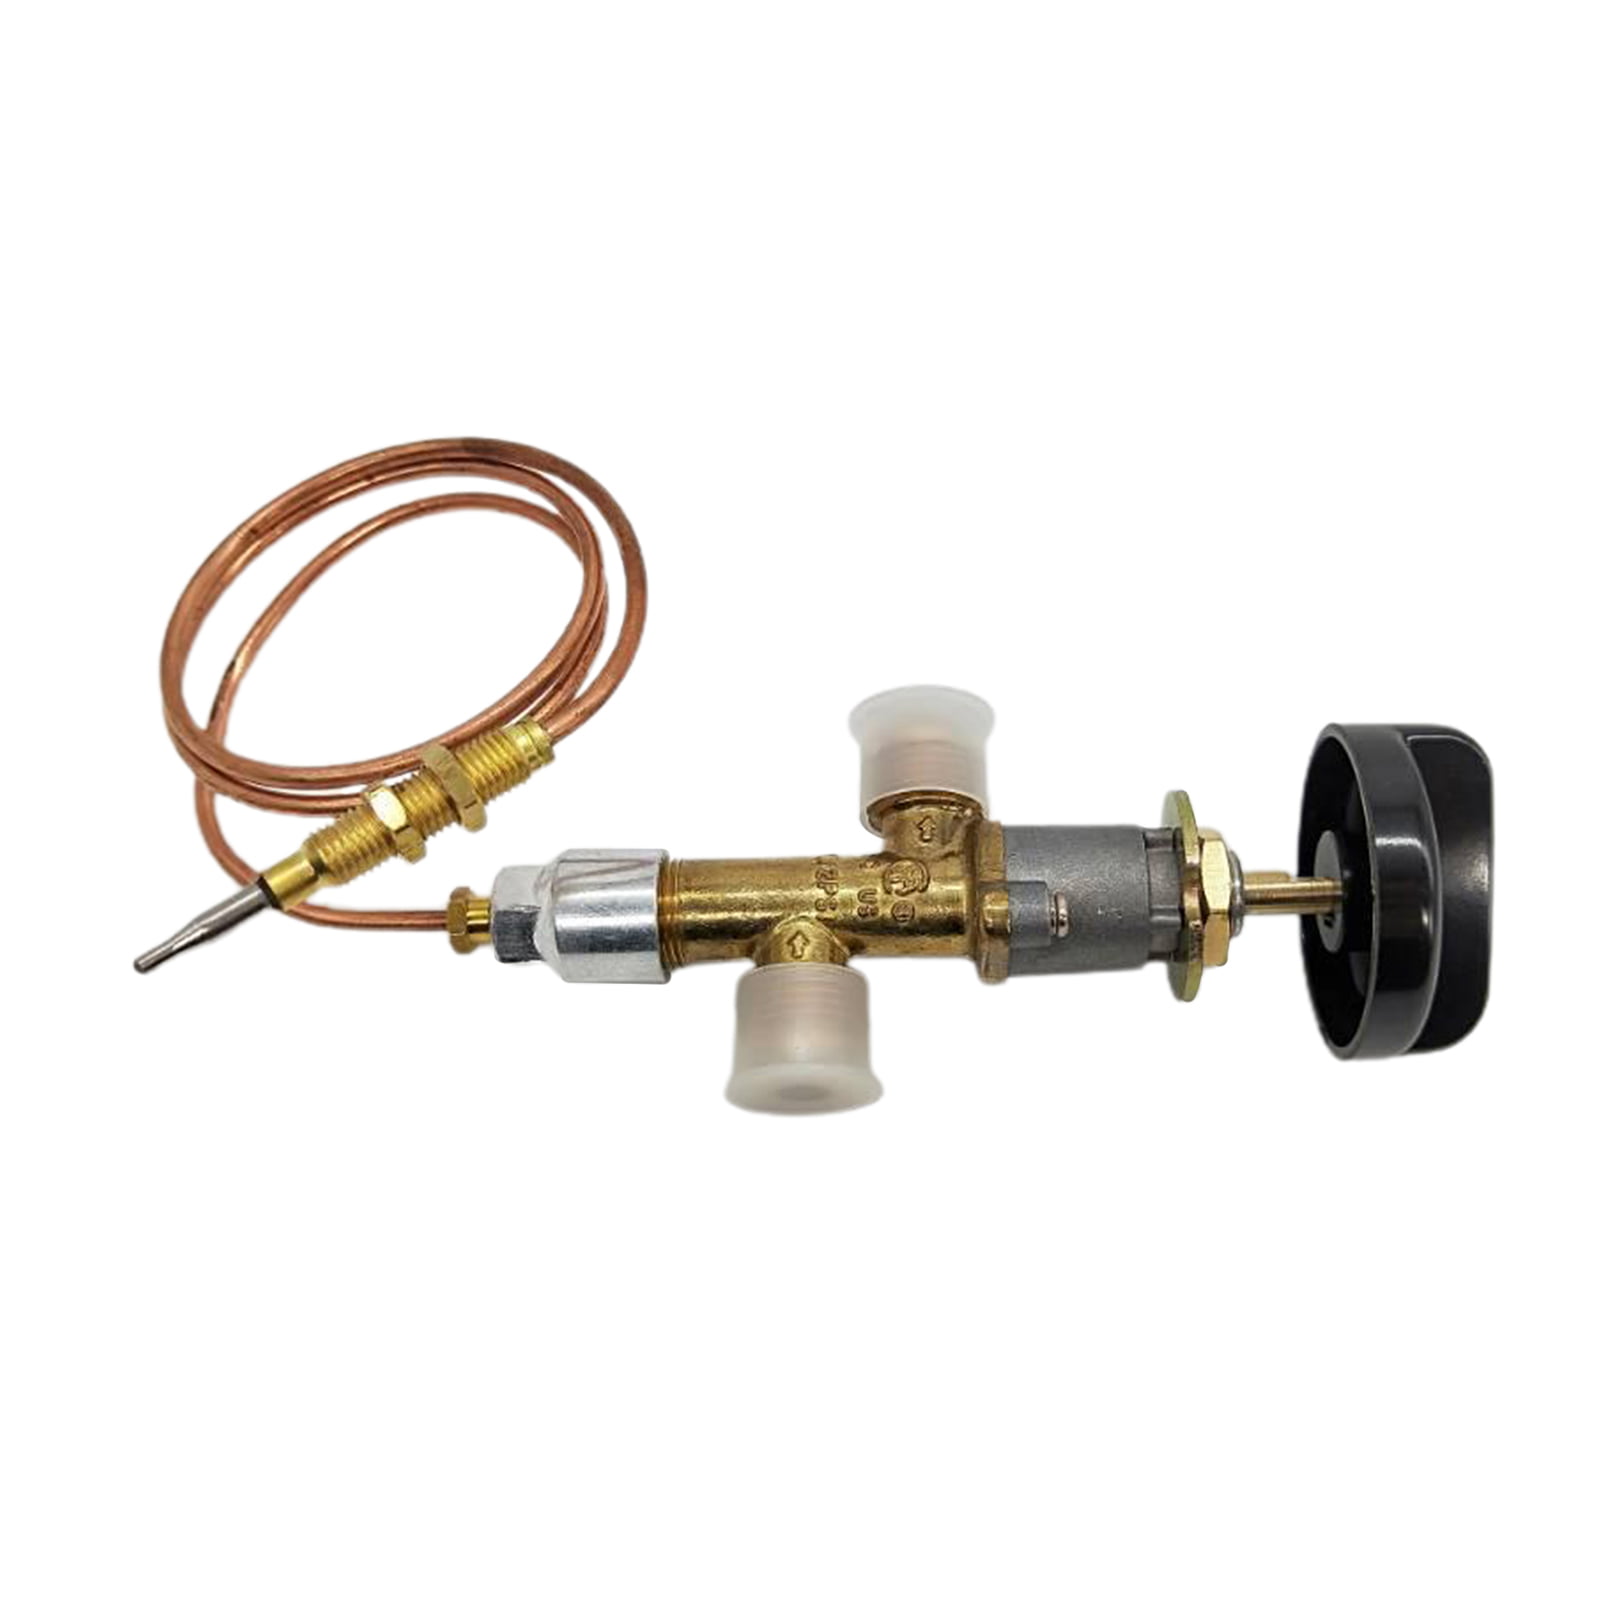 Furnace Gas Fire Pit Heater Control Valve Set w/ Thermocouple & Knob 